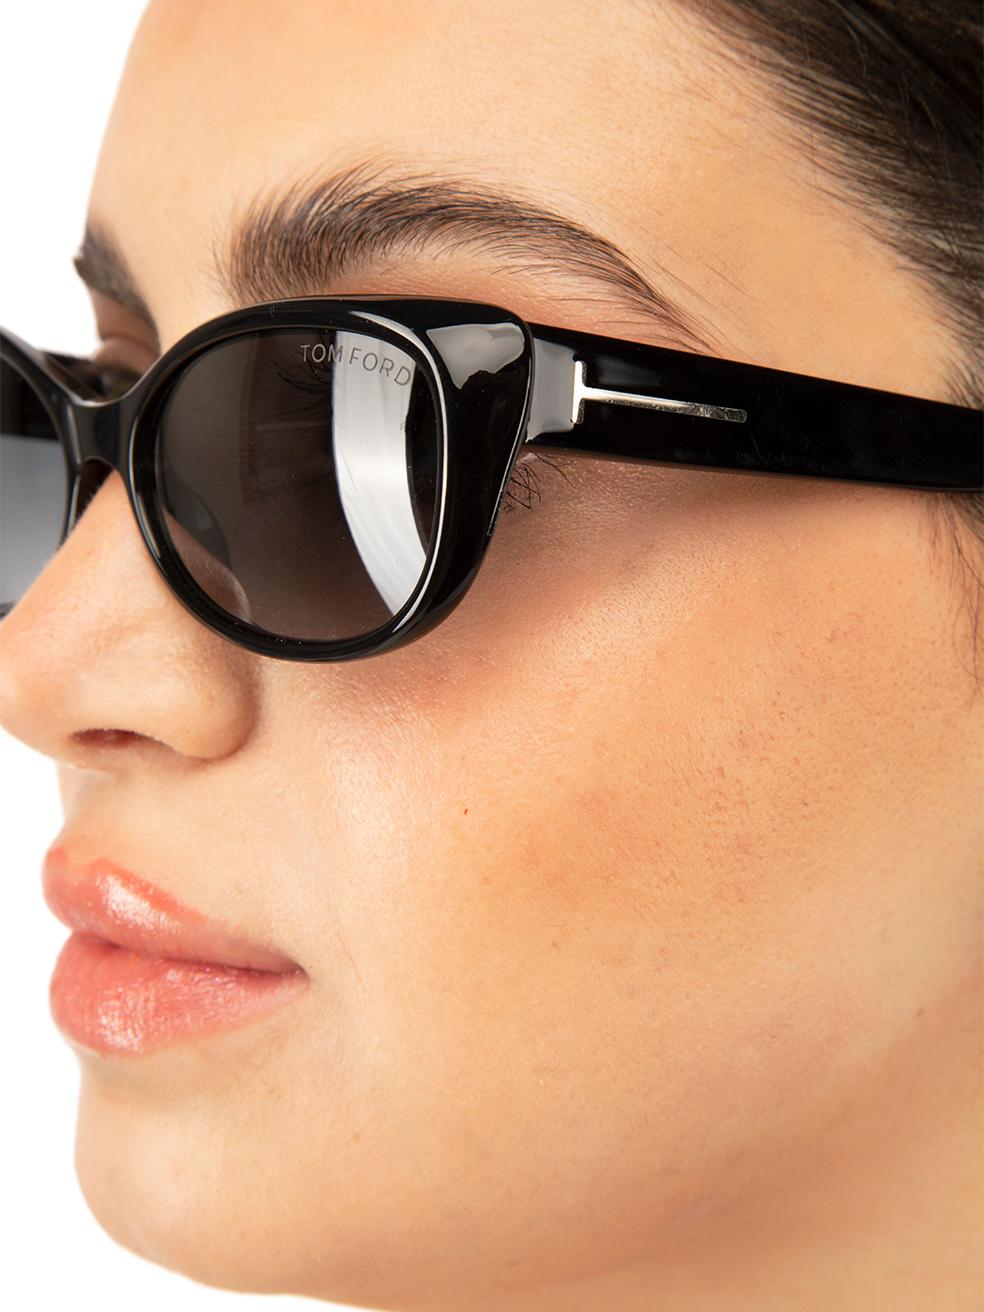 Tom Ford Shiny Black Sebastian Sunglasses For Sale 2